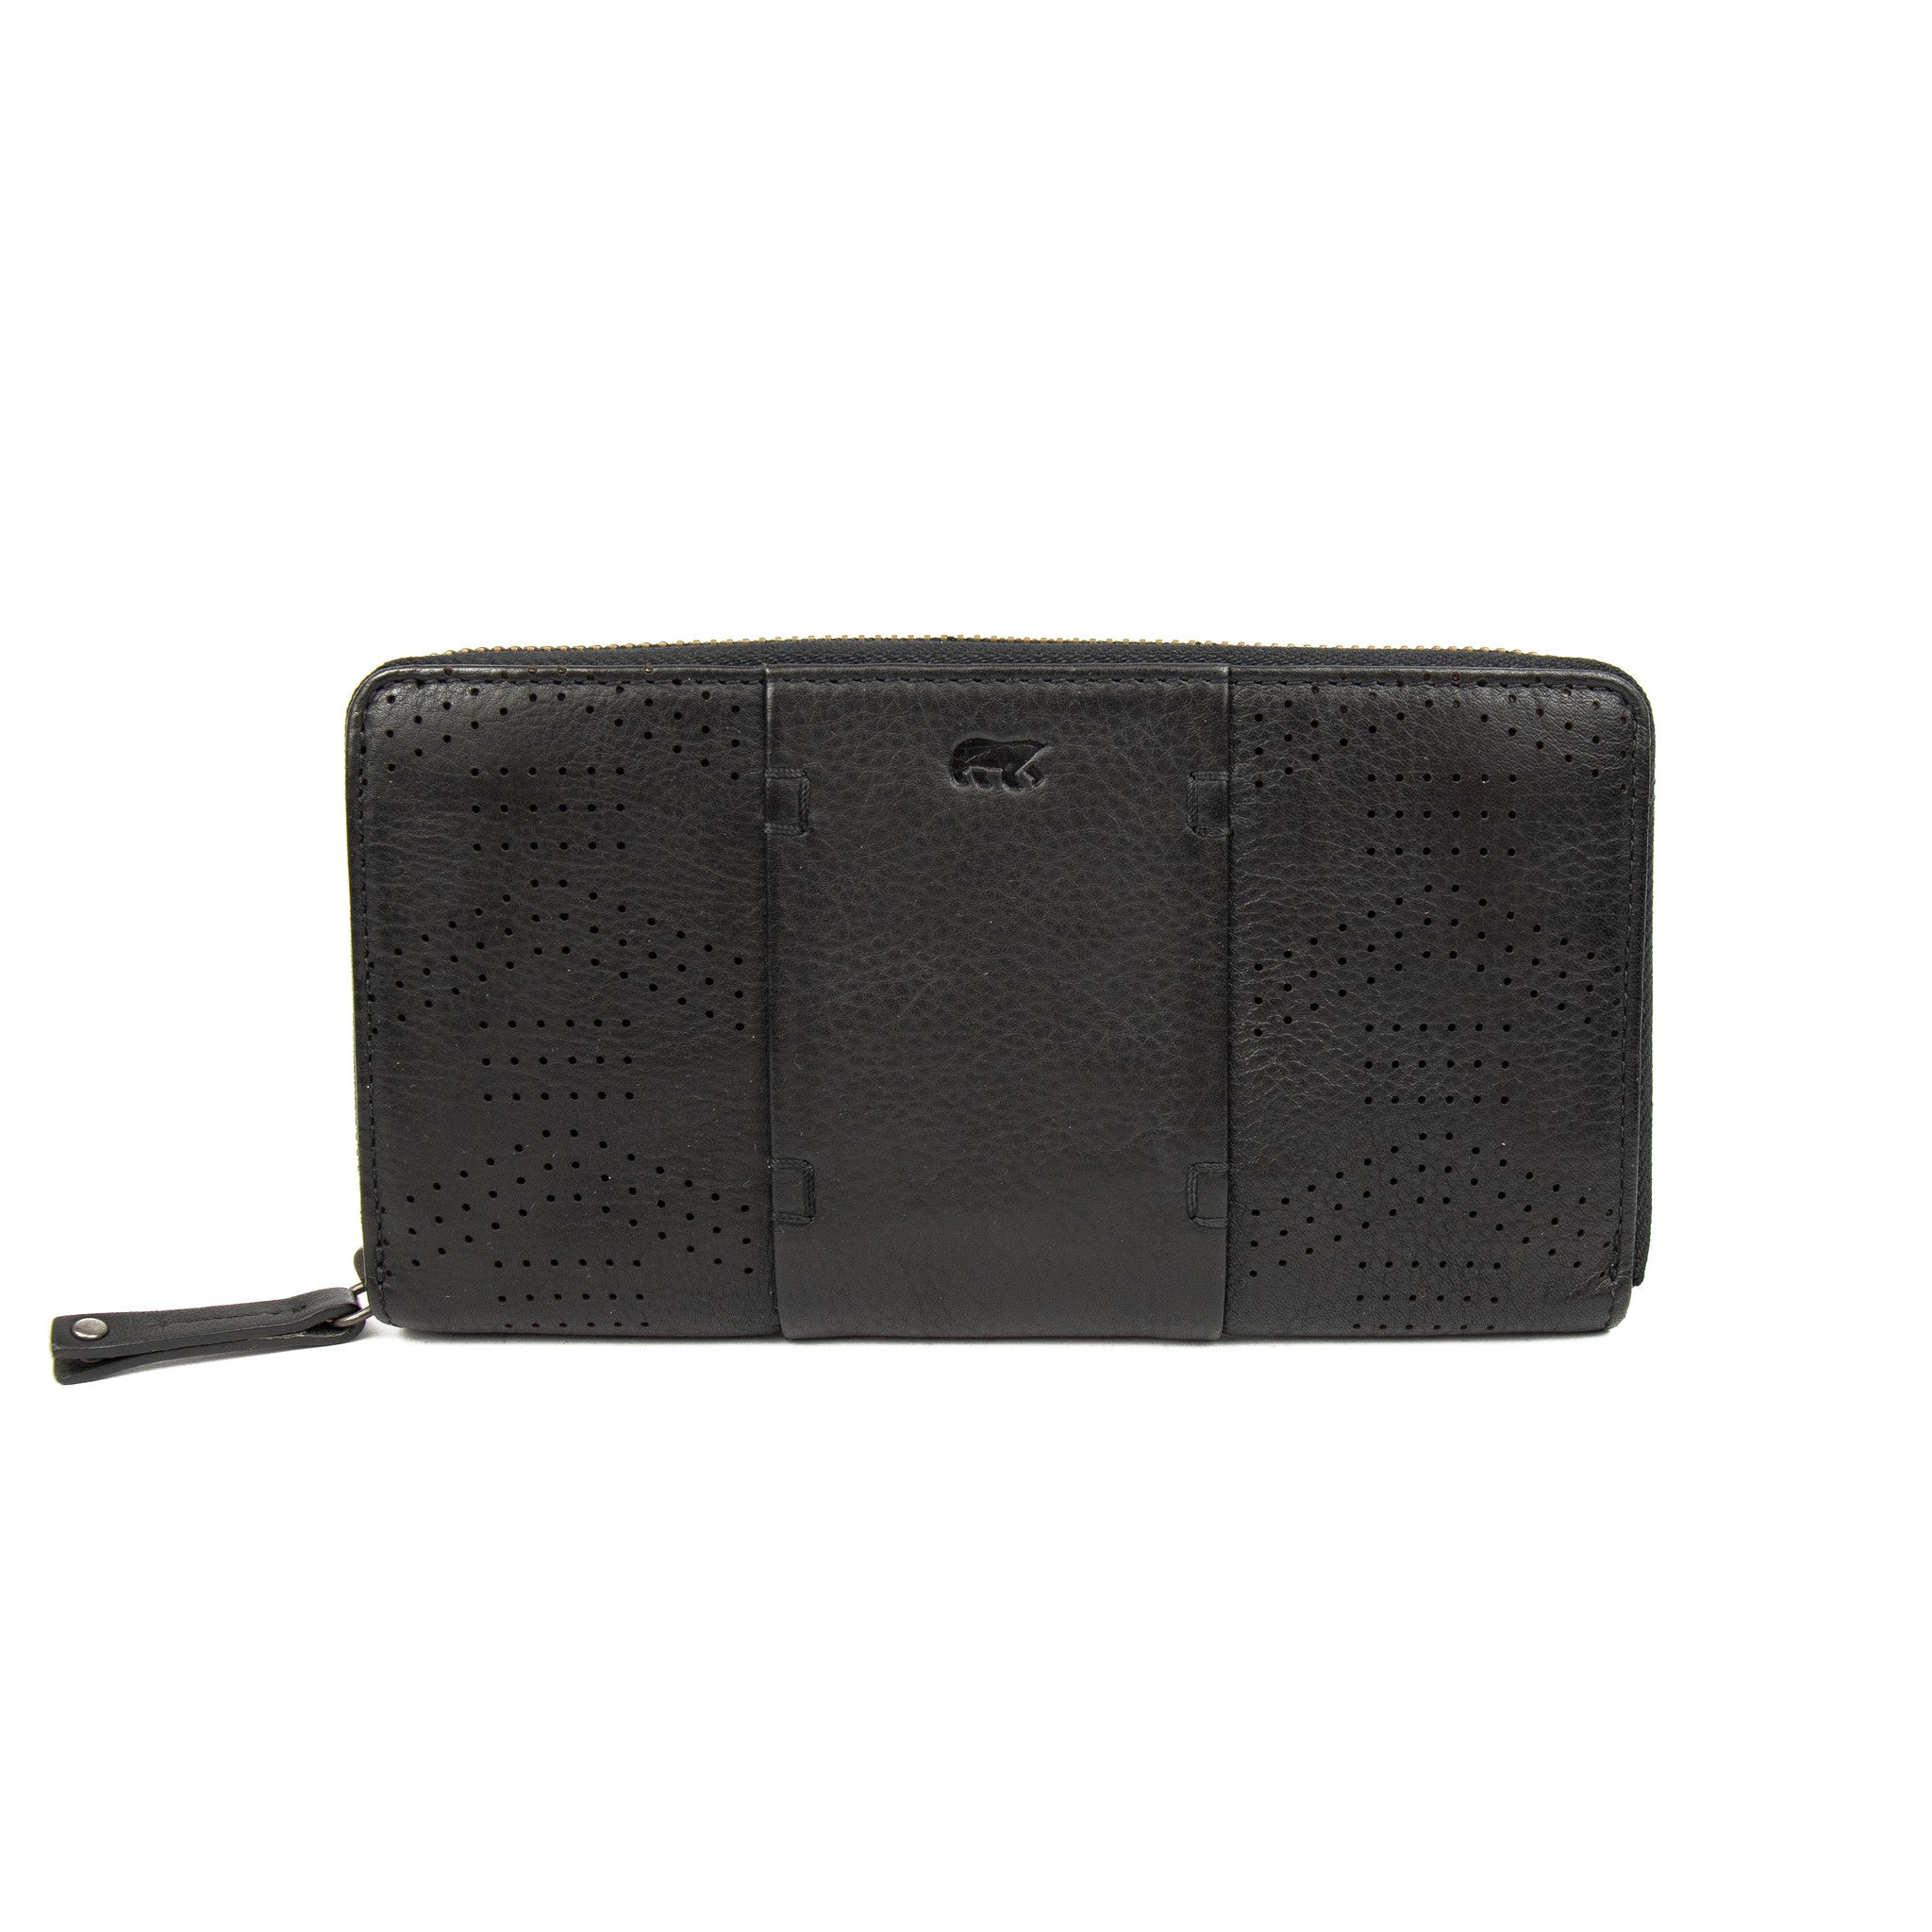 Zipper wallet 'Myrtle' black - CL 18207